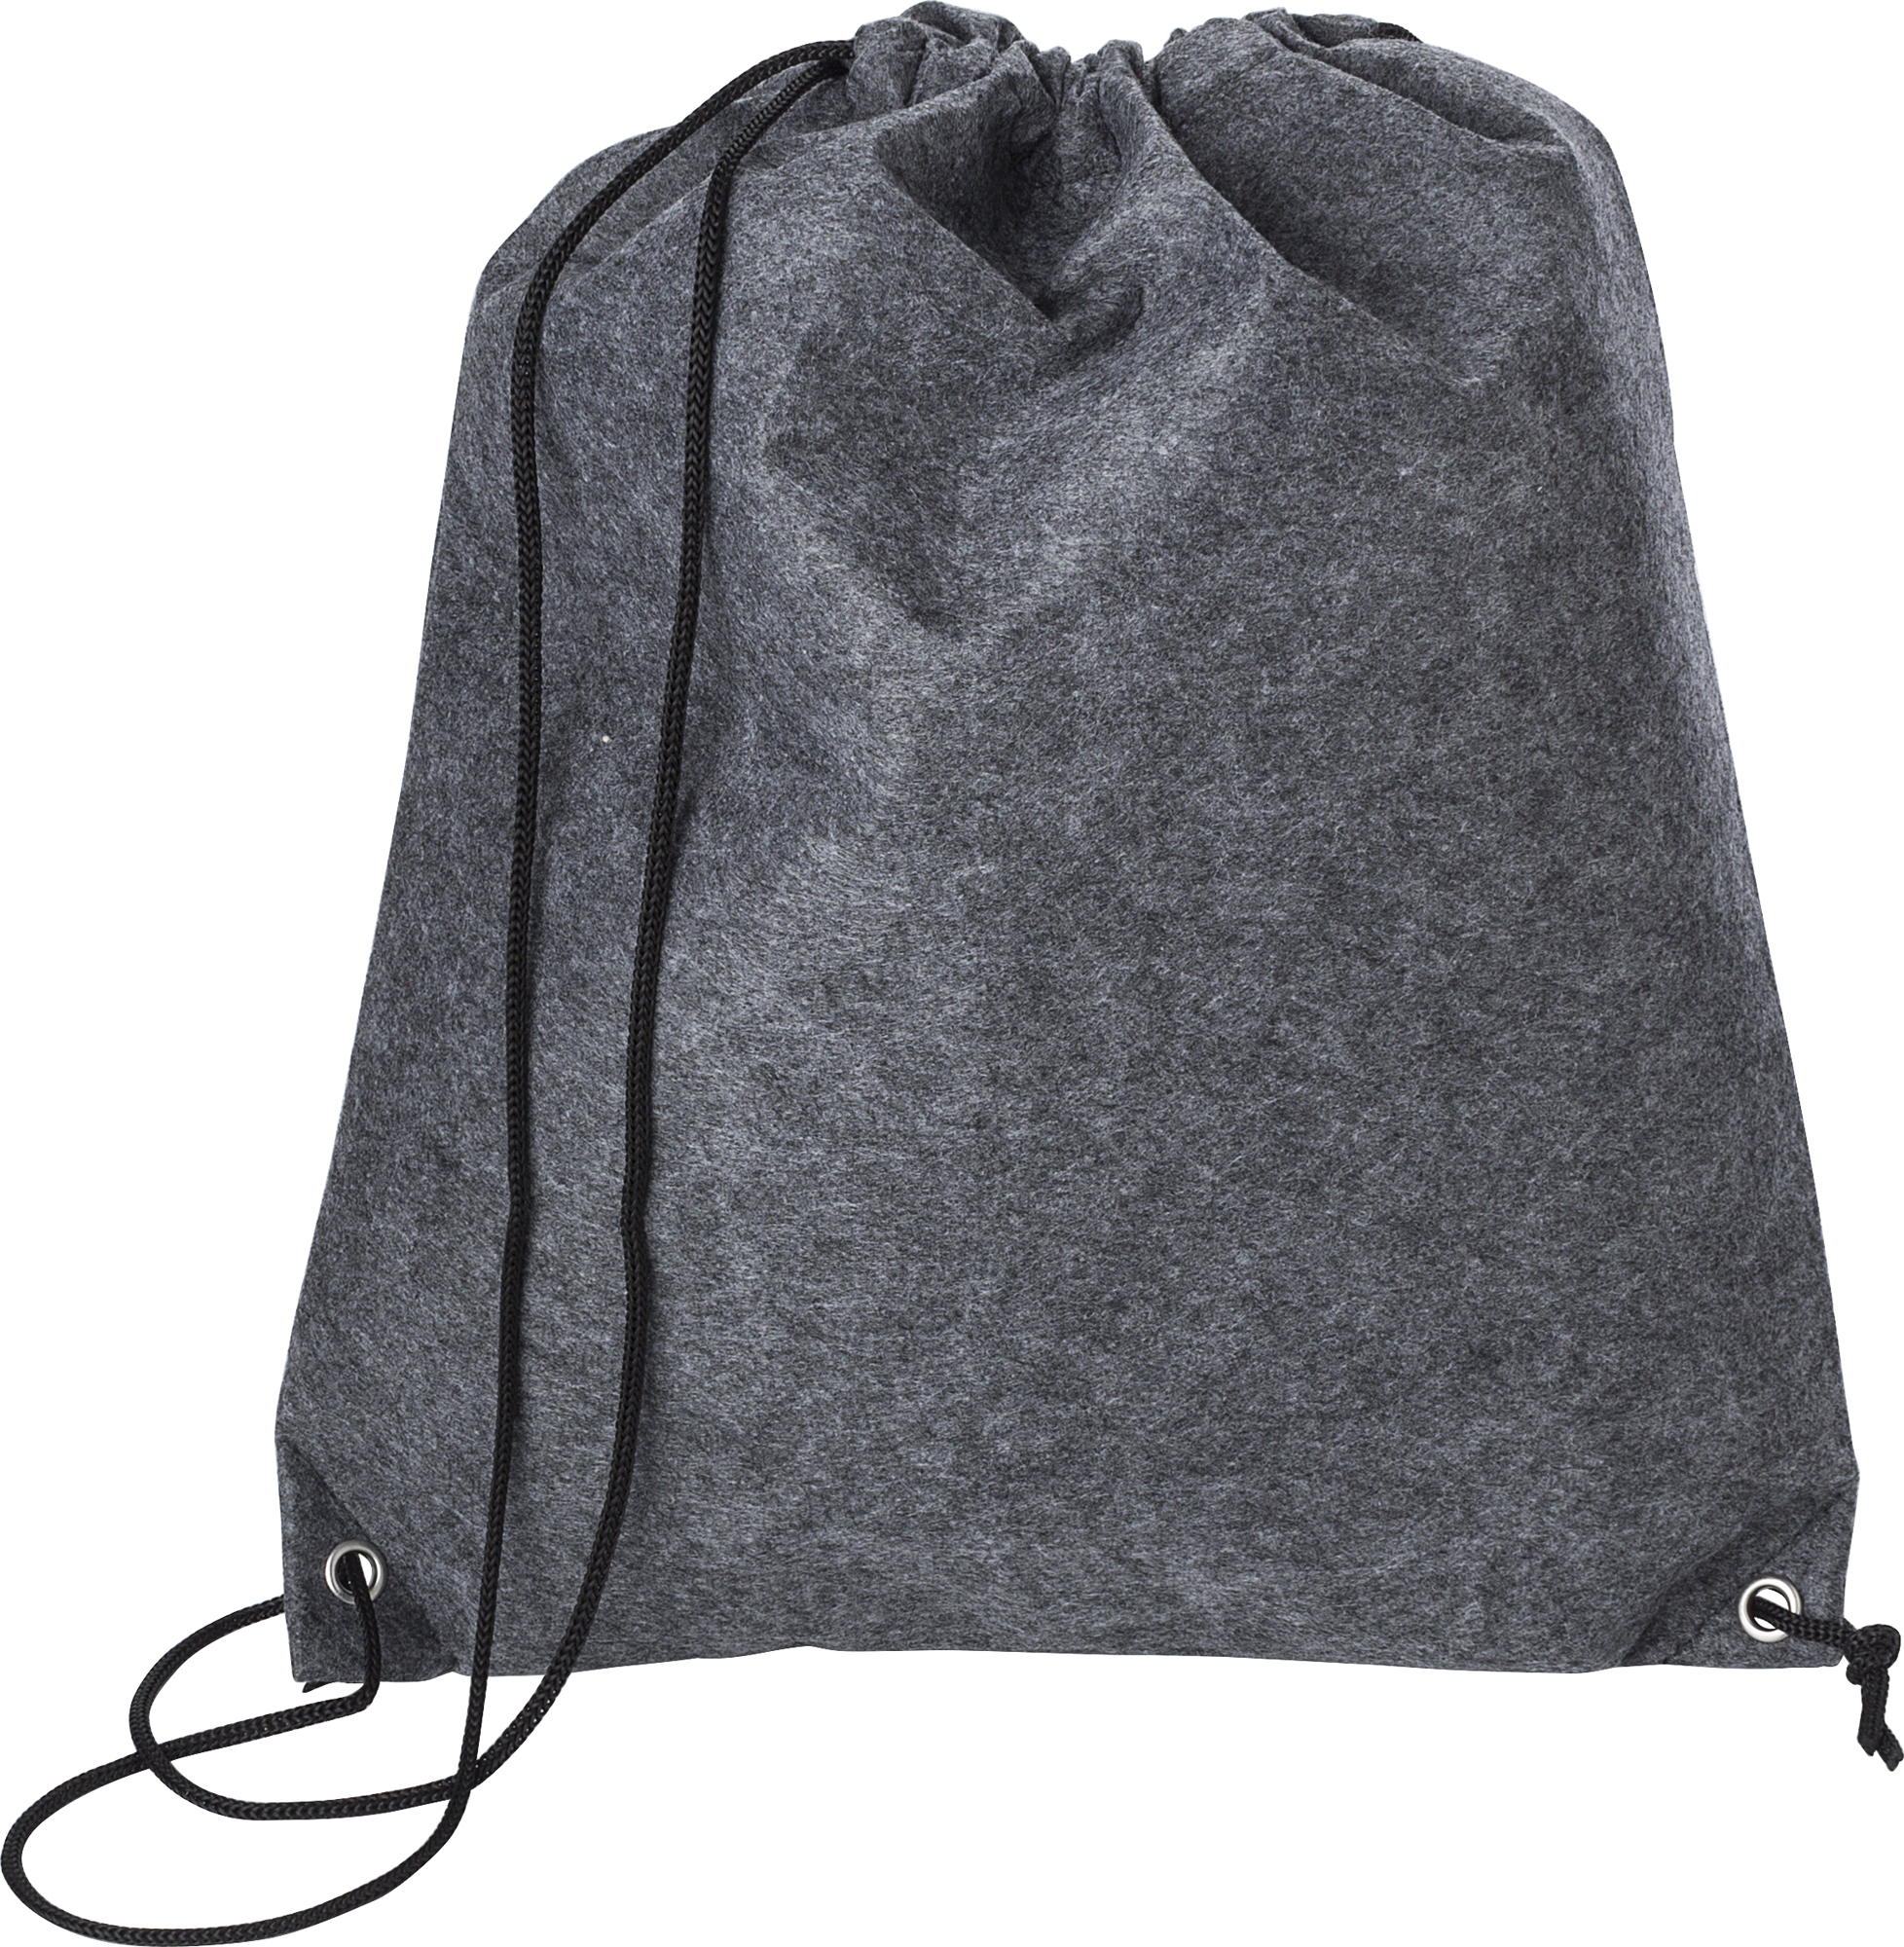 000000970950 003999999 2d090 frt pro02 2023 fal - RPET felt laptop backpack